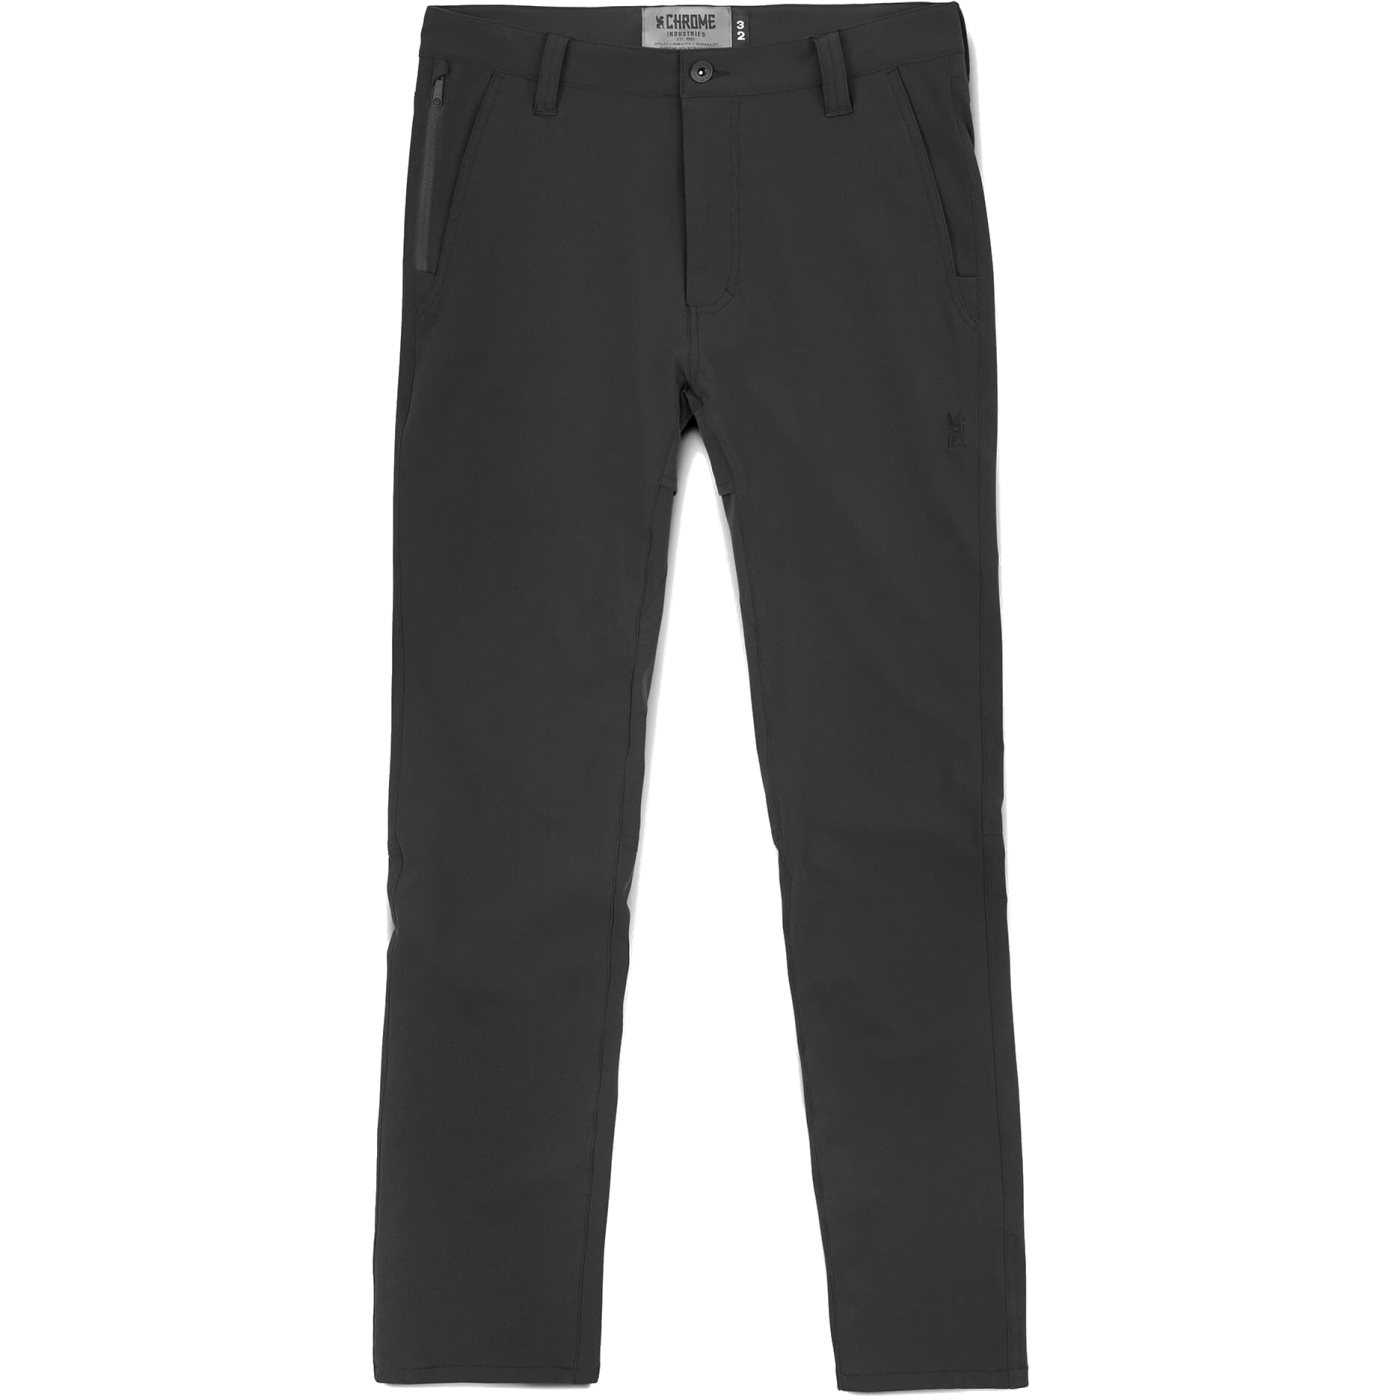 Image of CHROME Brannan Pants - black - length 32